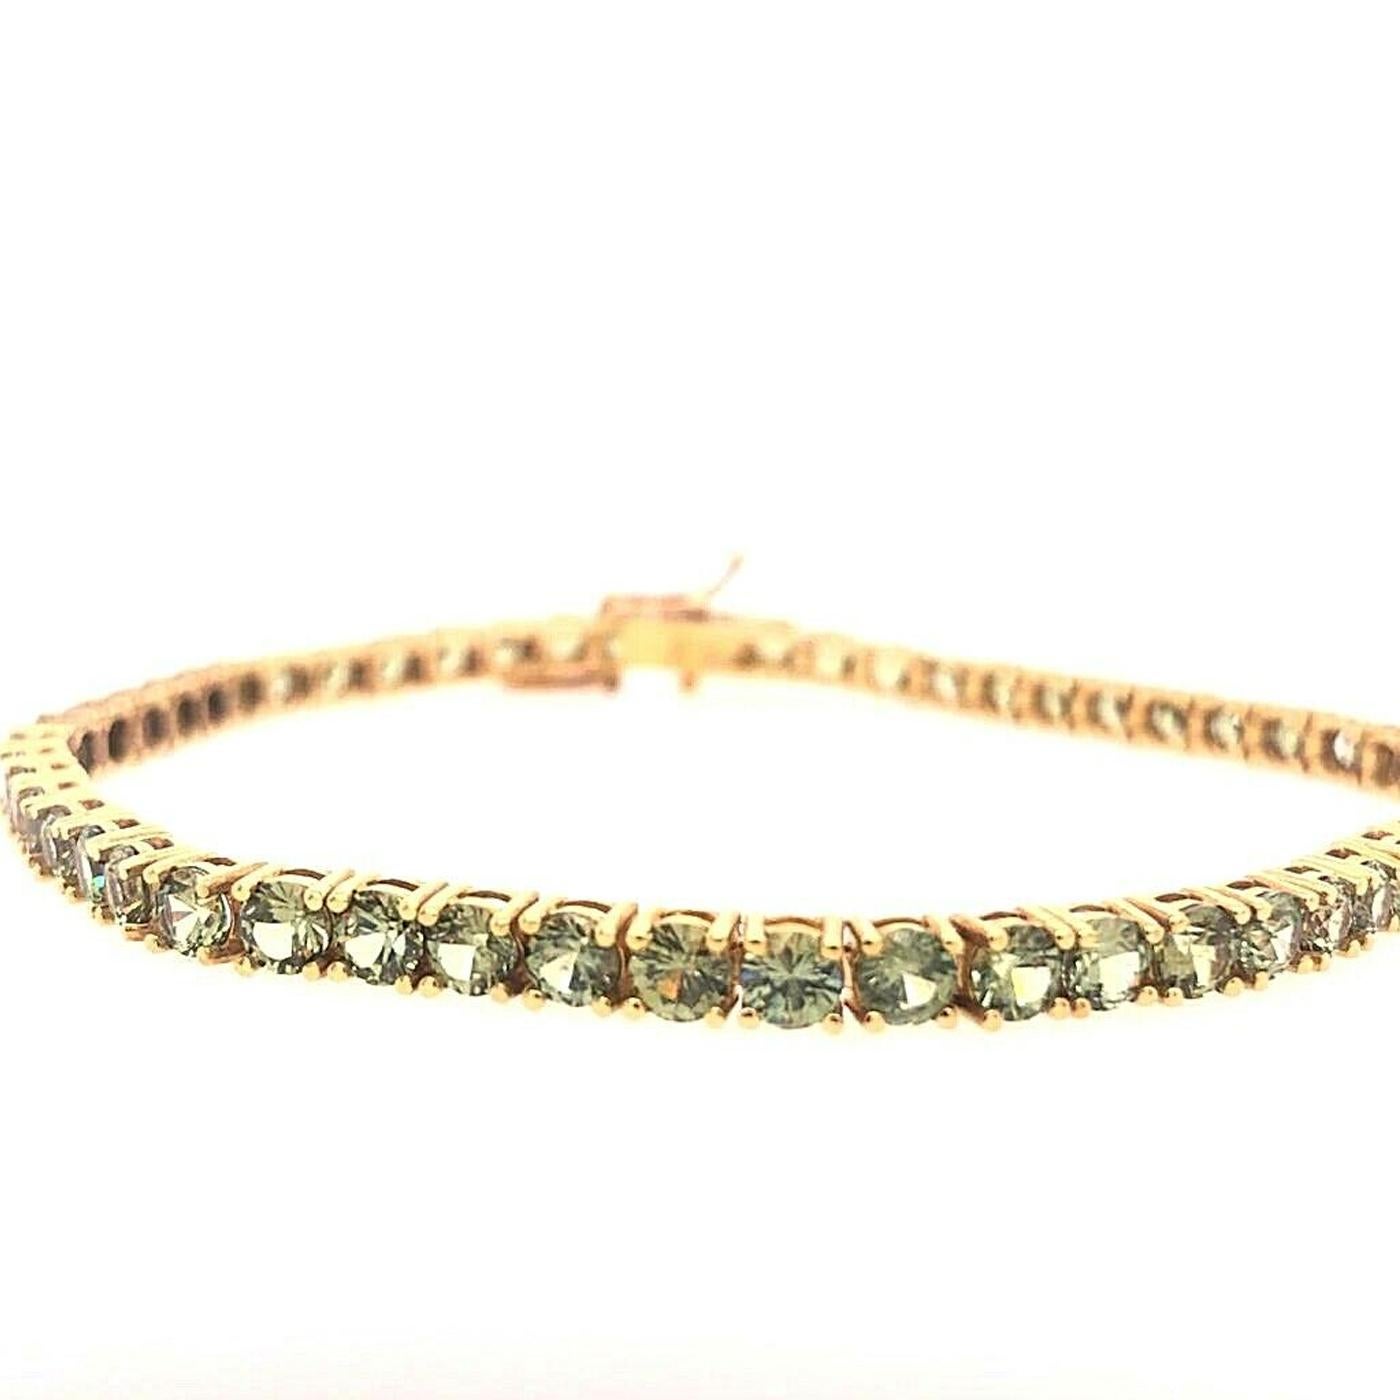 5.80ct 18ct white gold tennis bracelet guaranteed g/h colour si purity natural diamonds